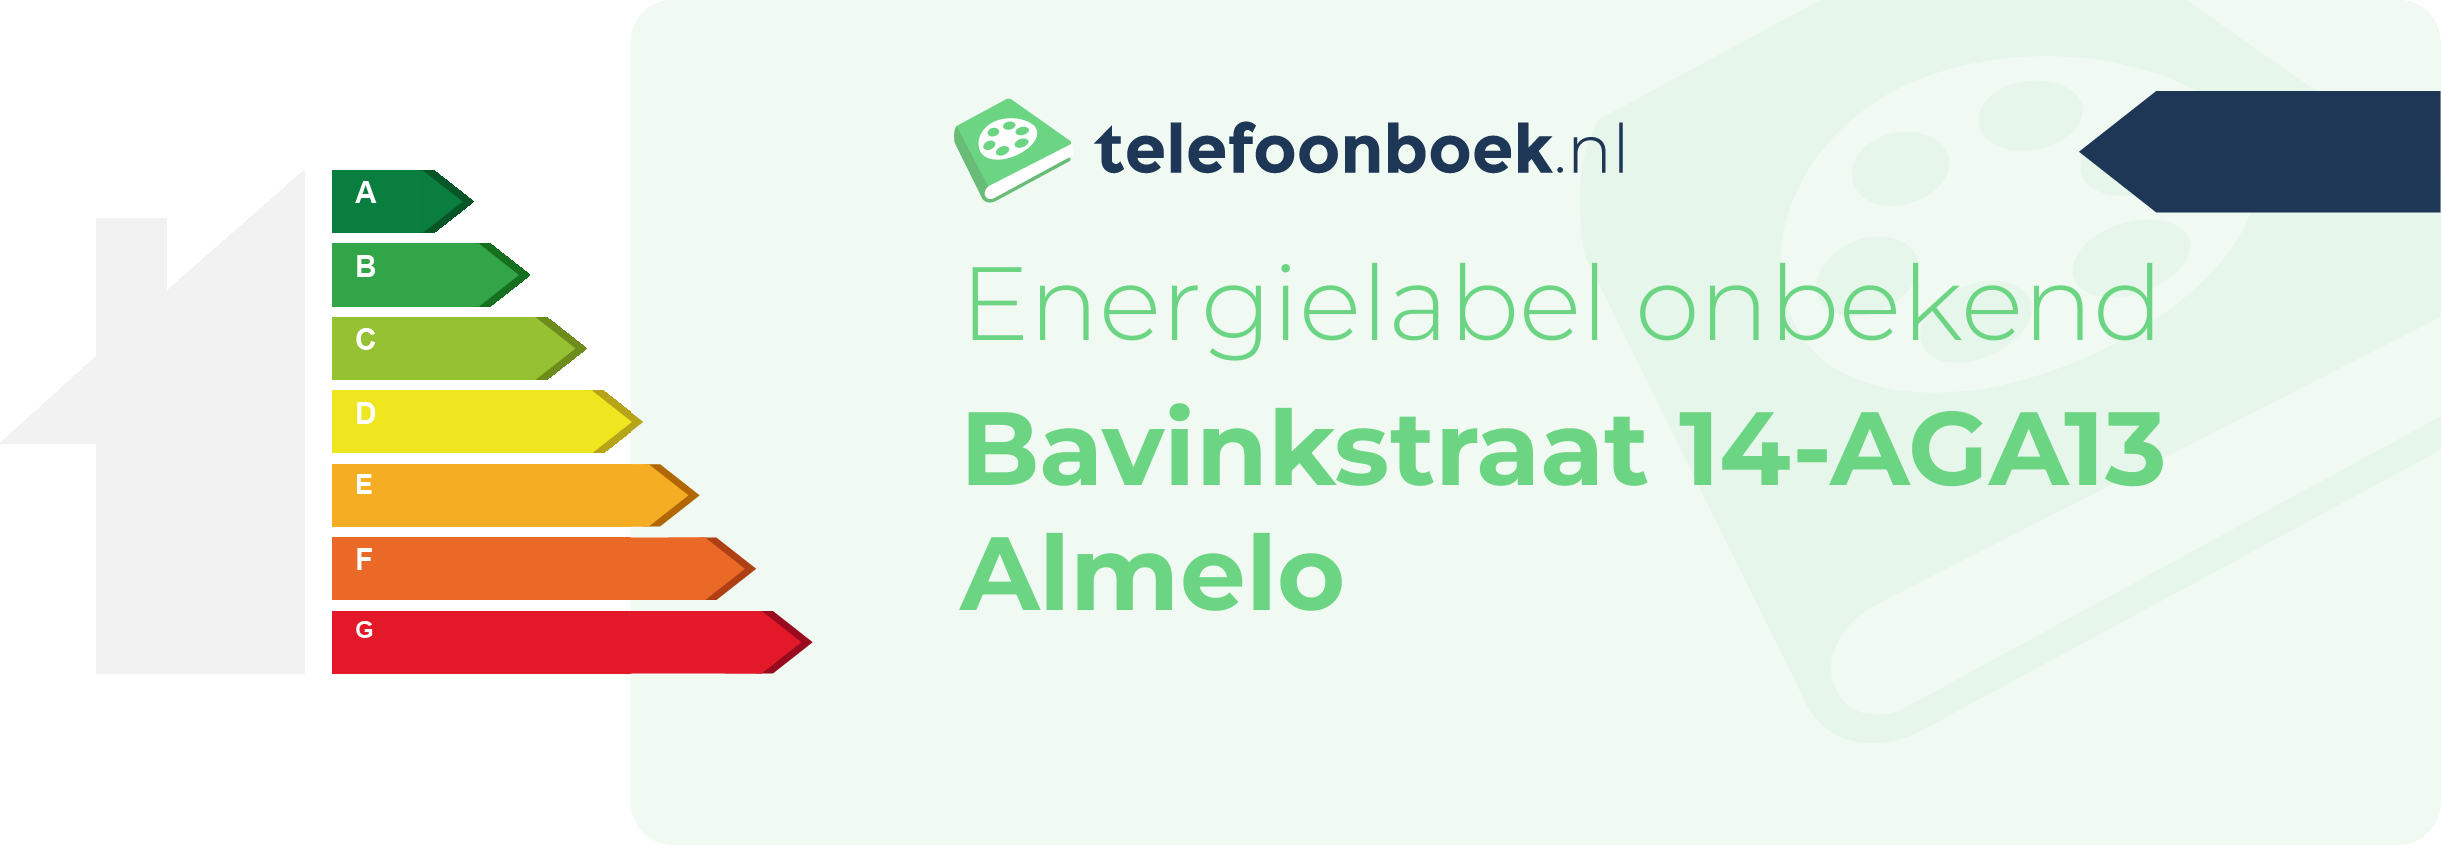 Energielabel Bavinkstraat 14-AGA13 Almelo